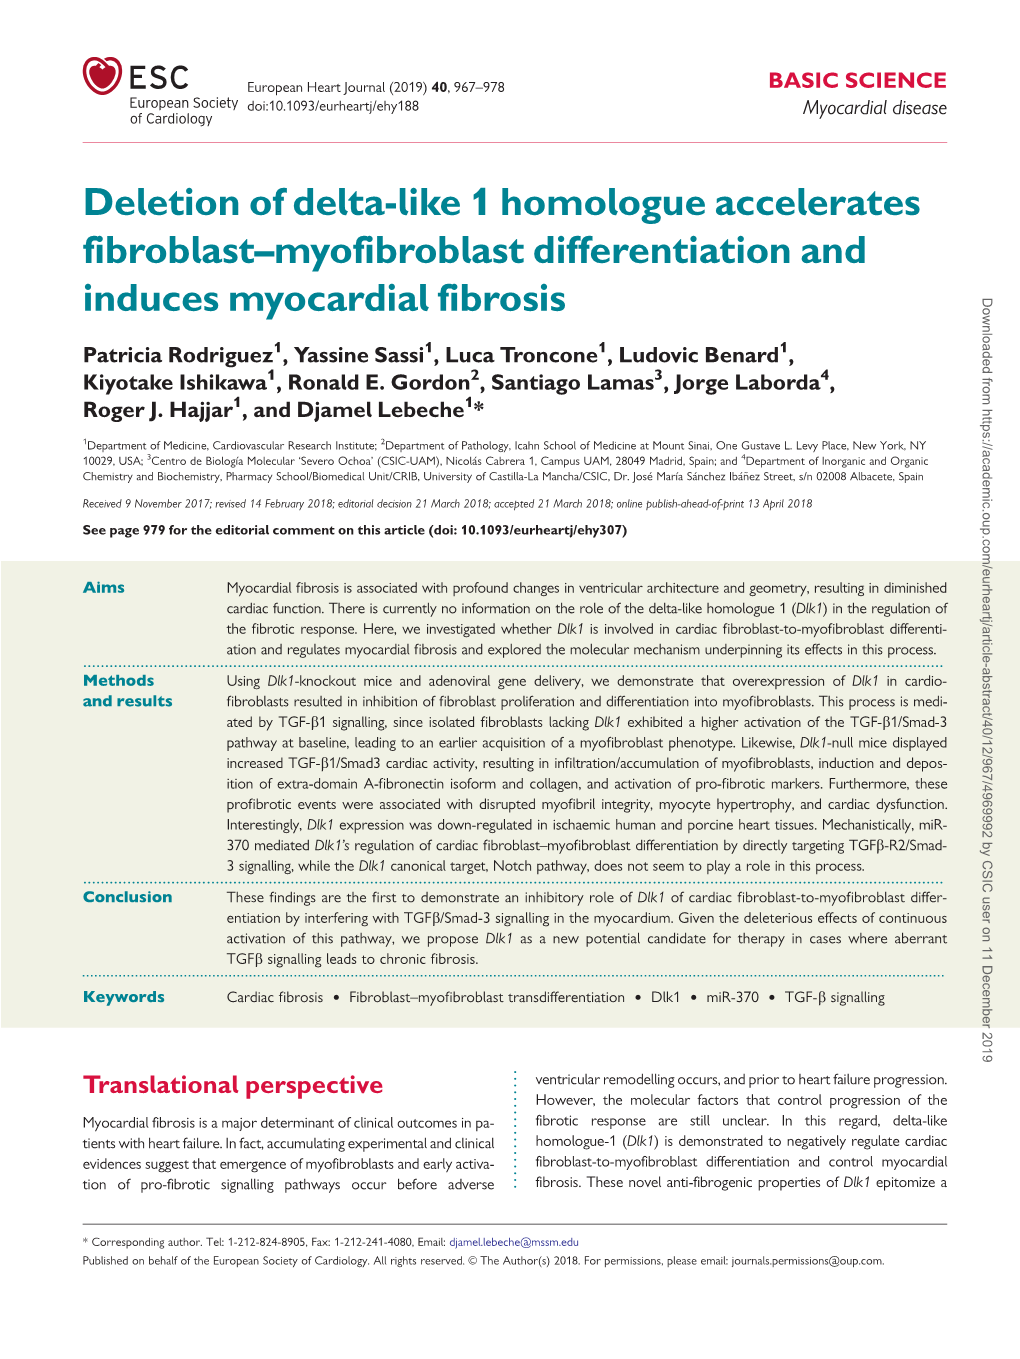 Deletion of Delta-Like 1 Homologue Accelerates Fibroblast–Myofibroblast Differentiation And